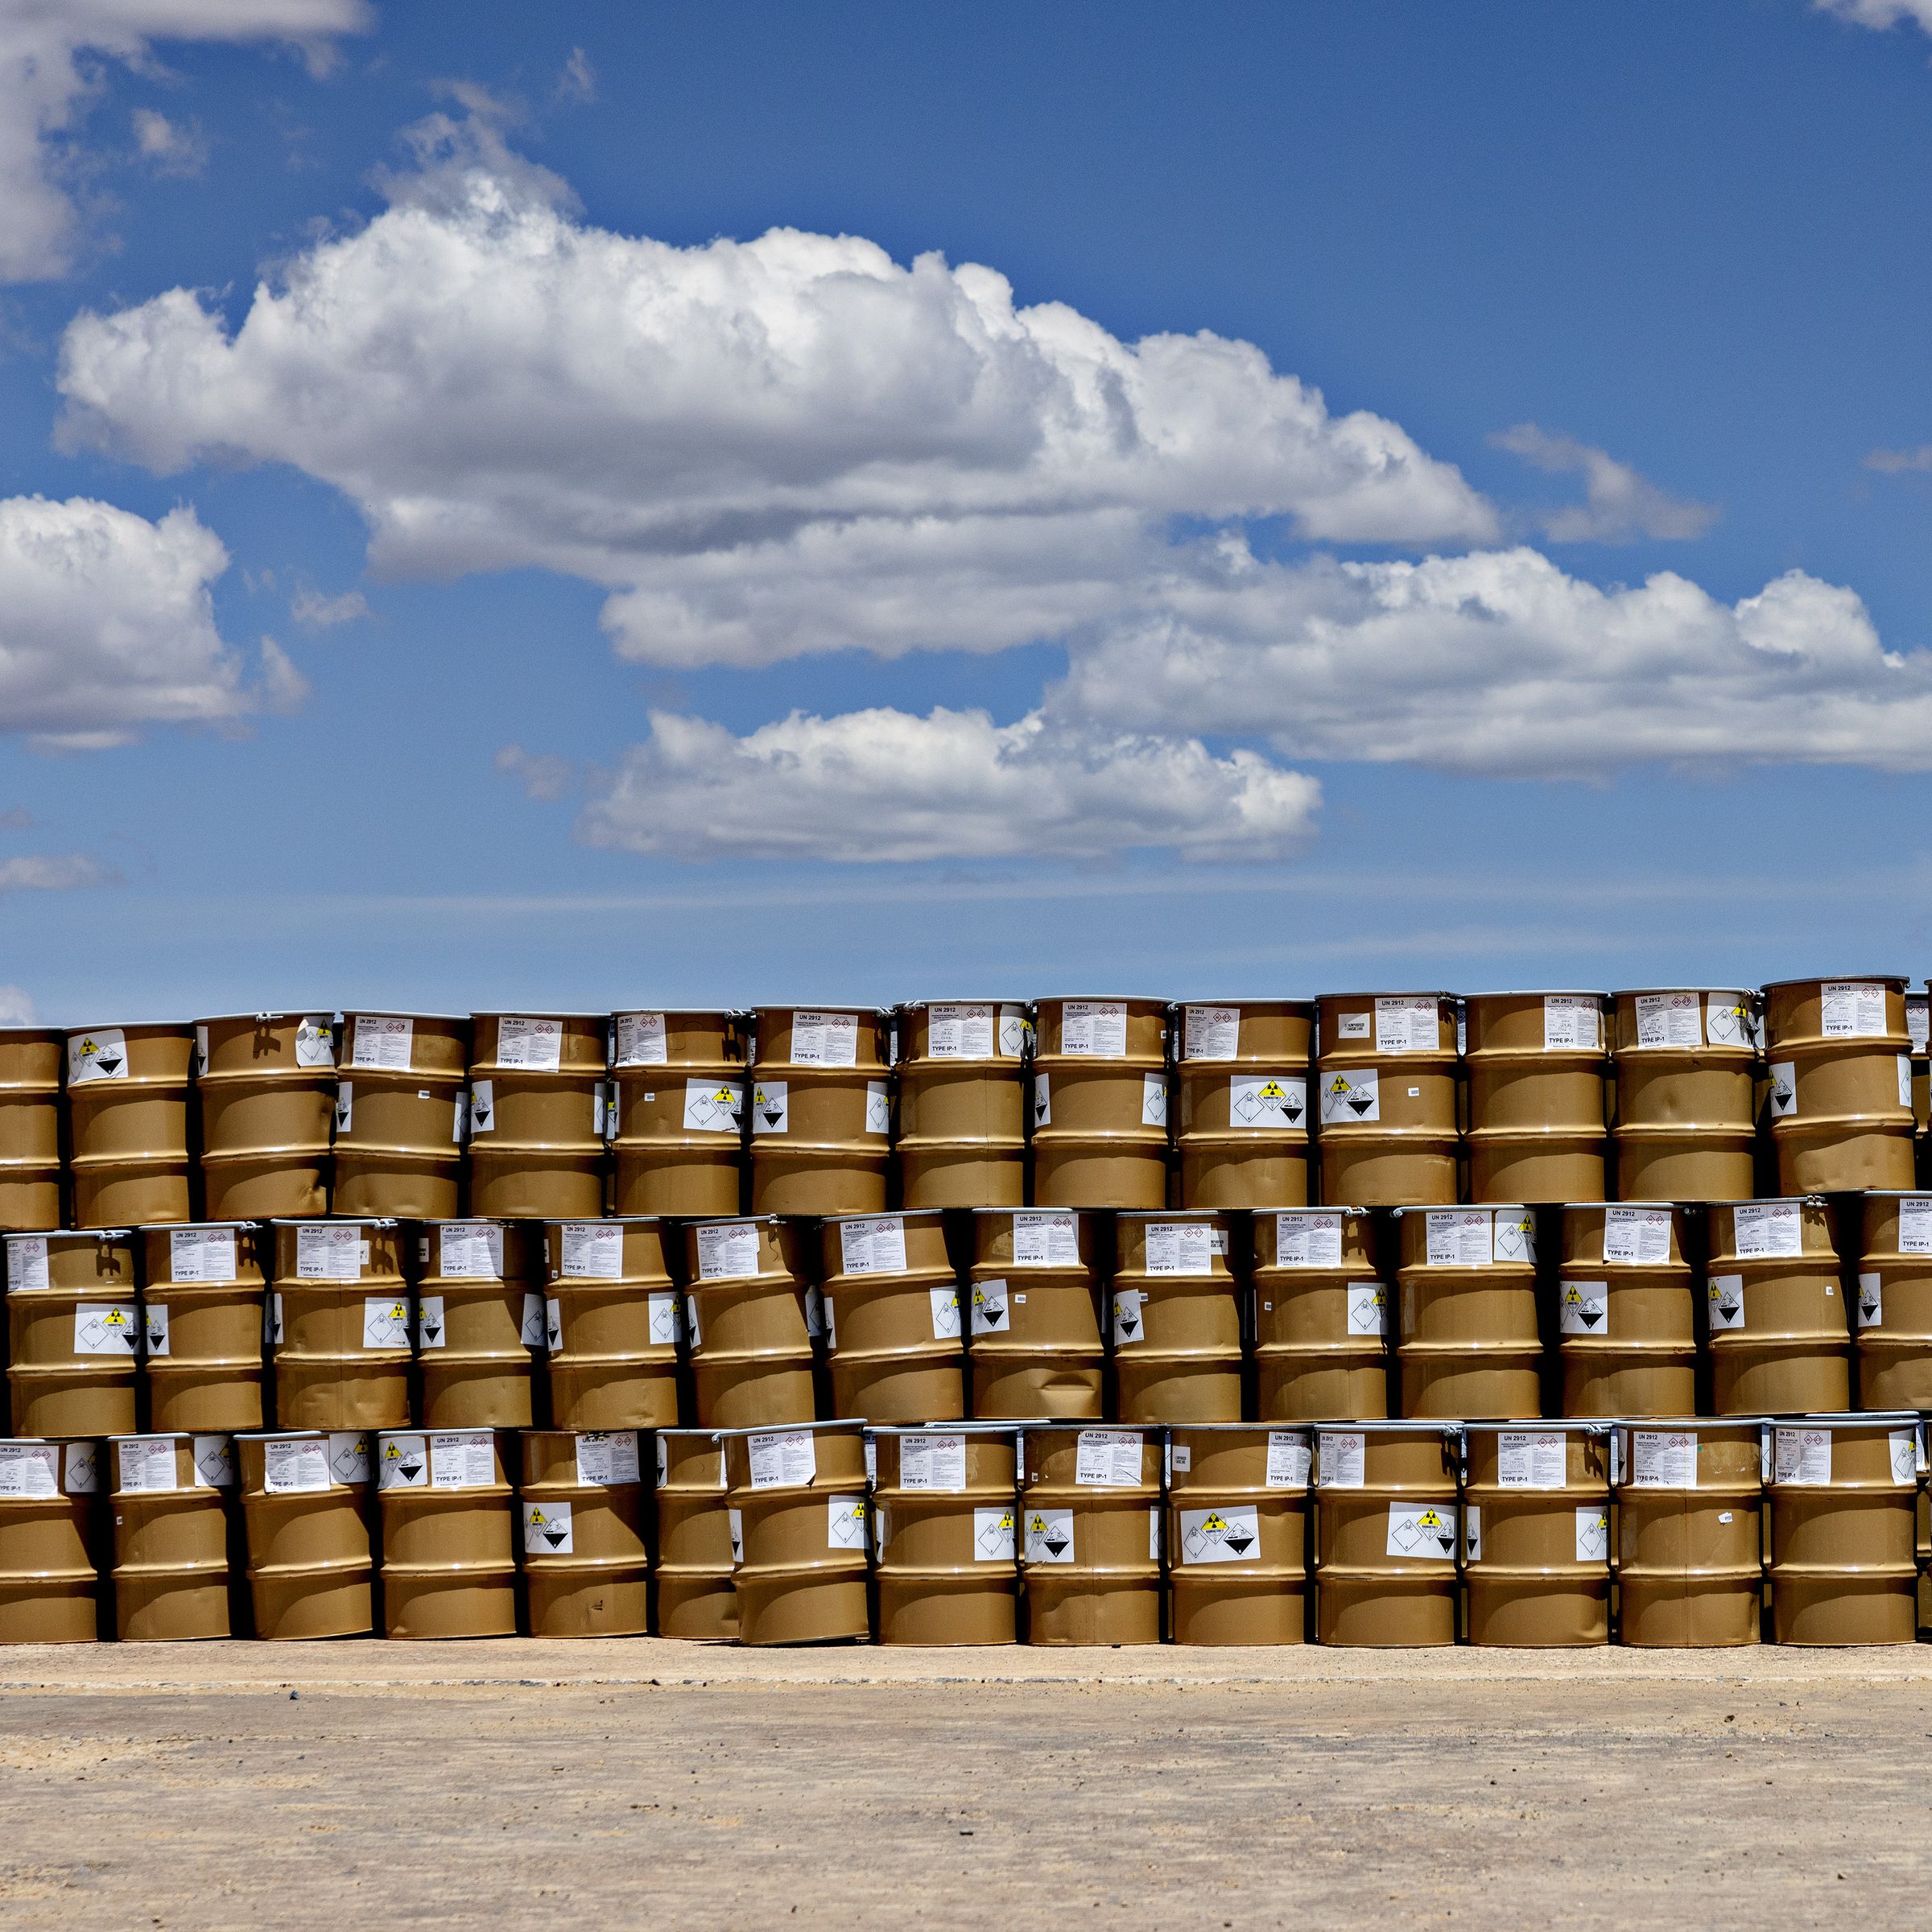 A long stack of barrels three rows high.